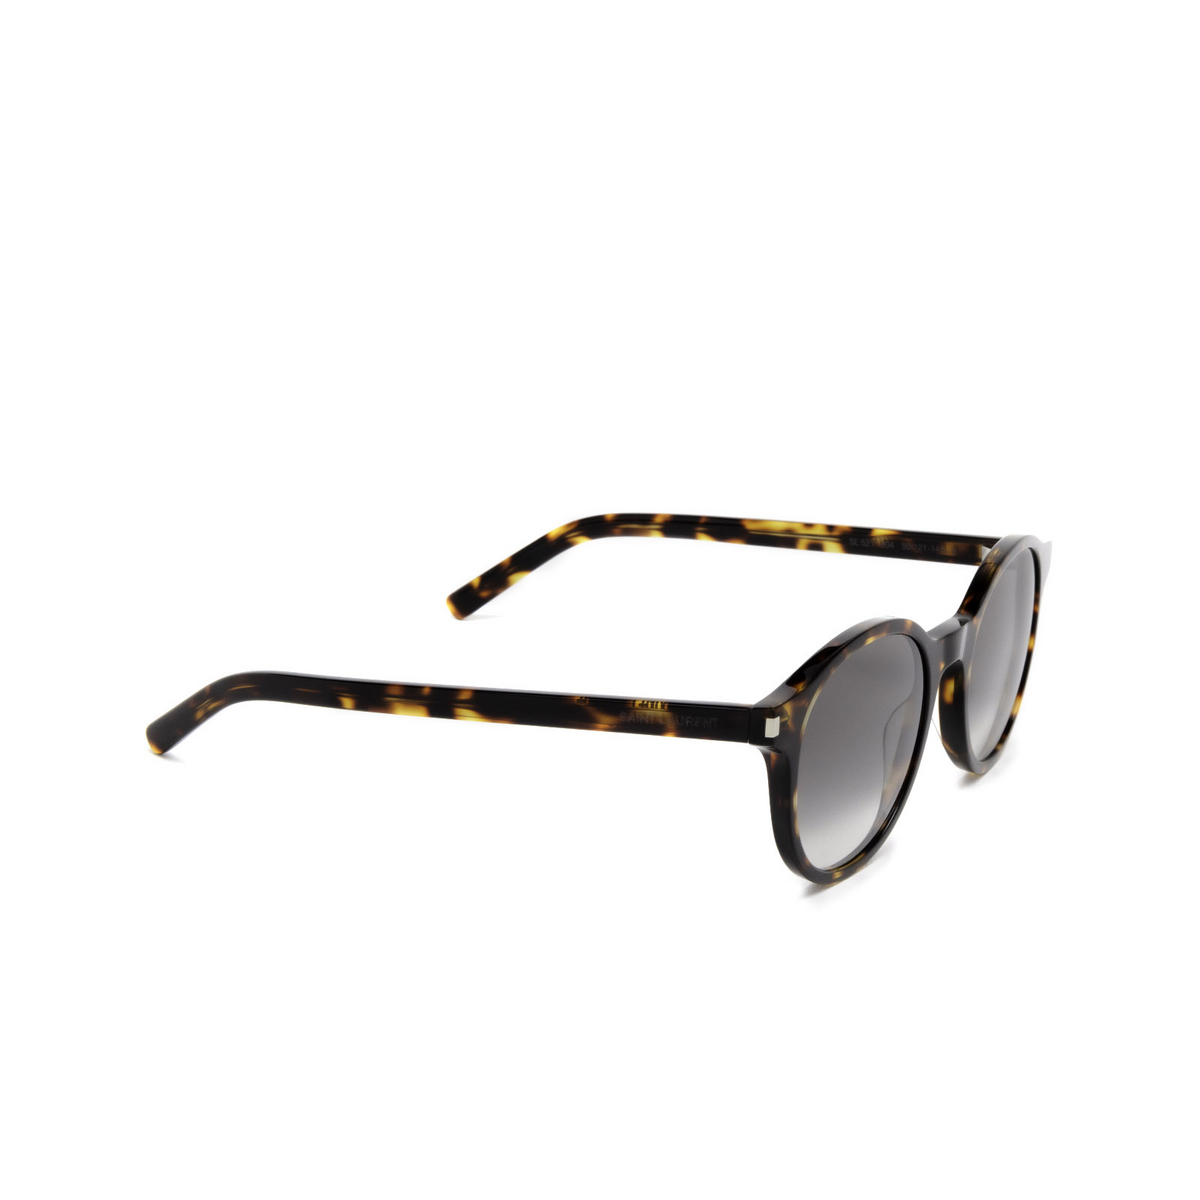 Saint Laurent® Round Sunglasses: SL 521 color Havana 004 - three-quarters view.